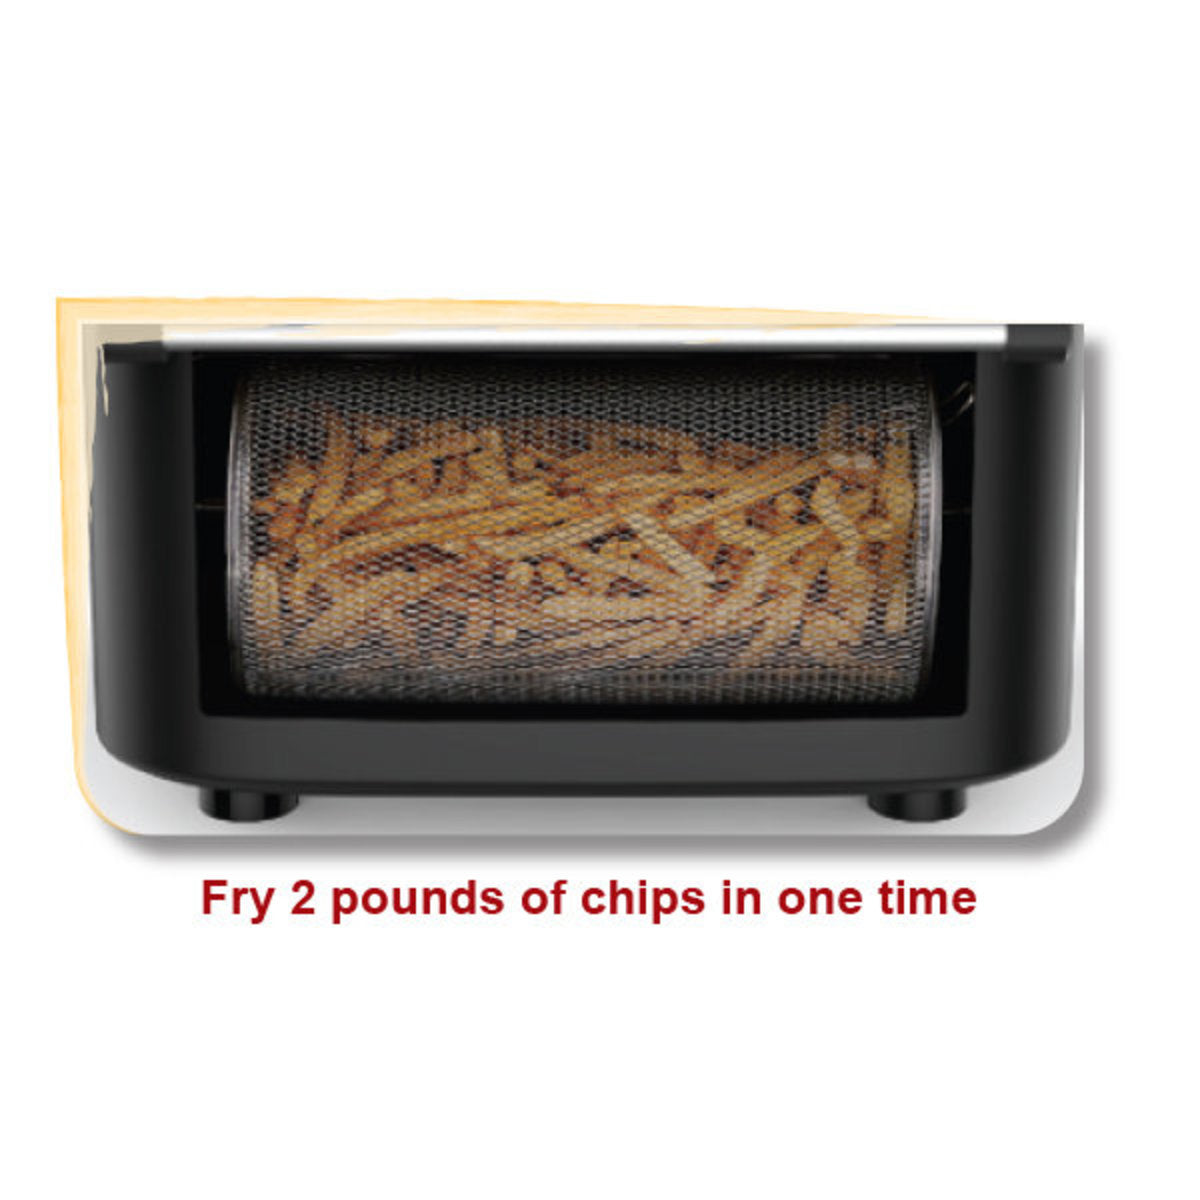 16L 空氣炸鍋烤箱 Air Fryer Oven 送烘焙工具3套裝